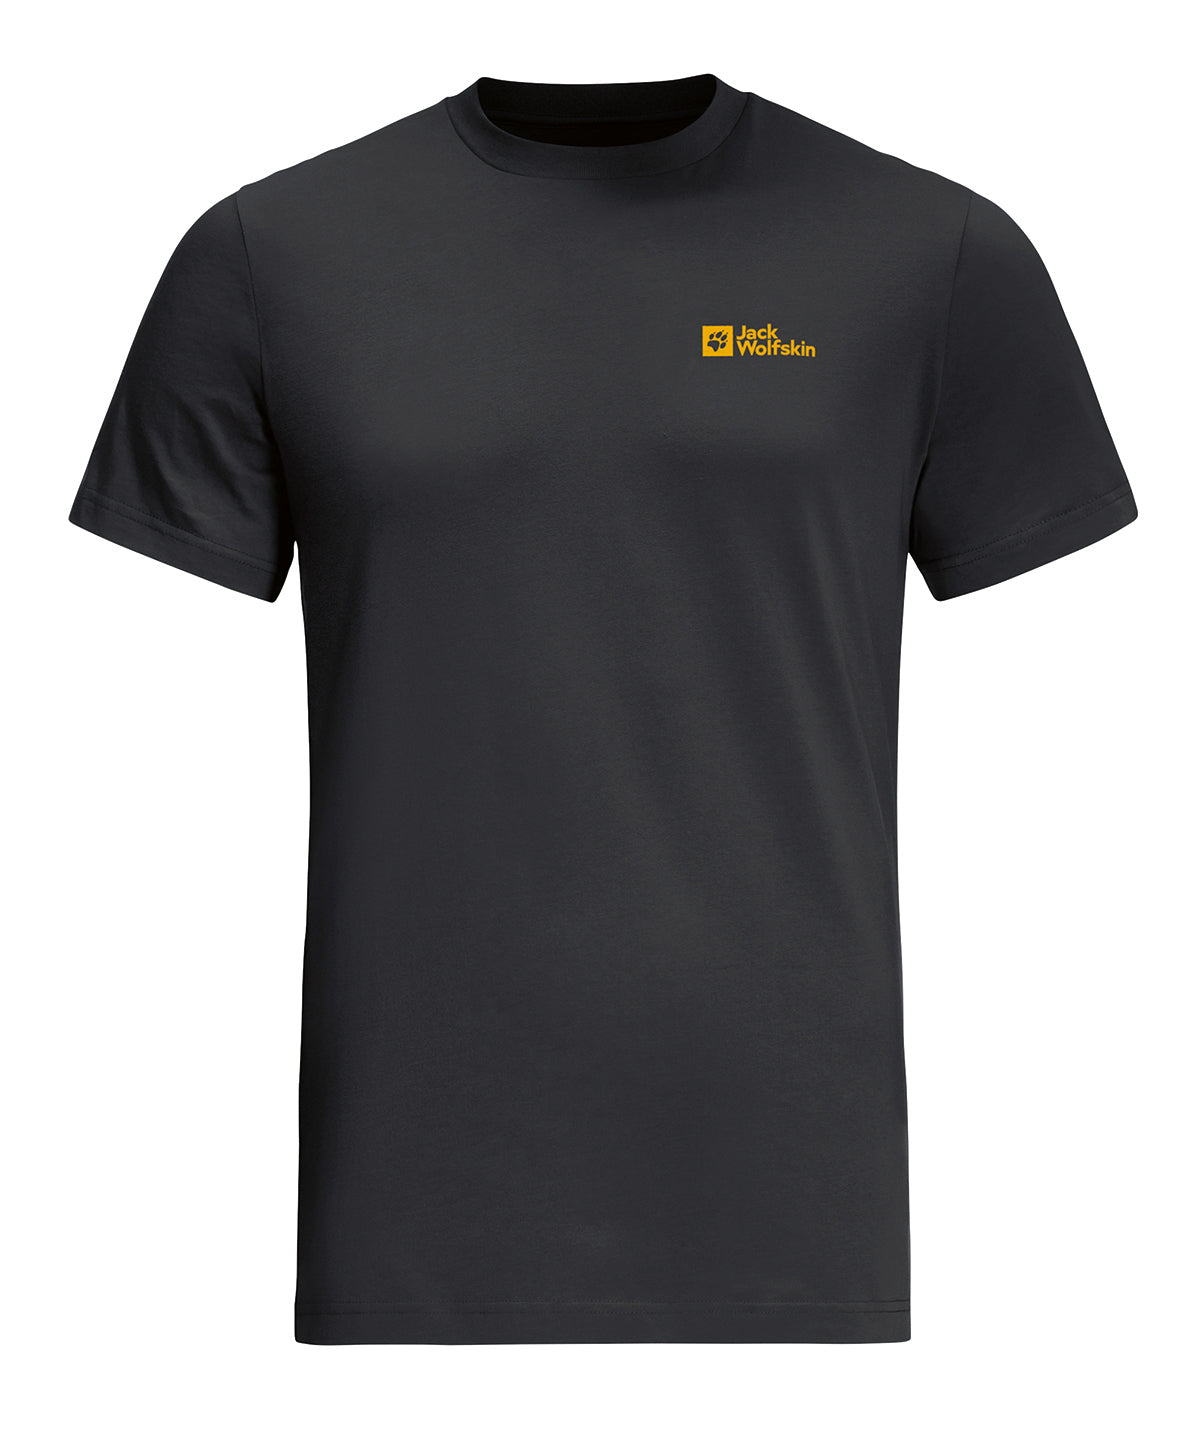 Personalised T-Shirts - Black Jack Wolfskin Essential tee (NL)